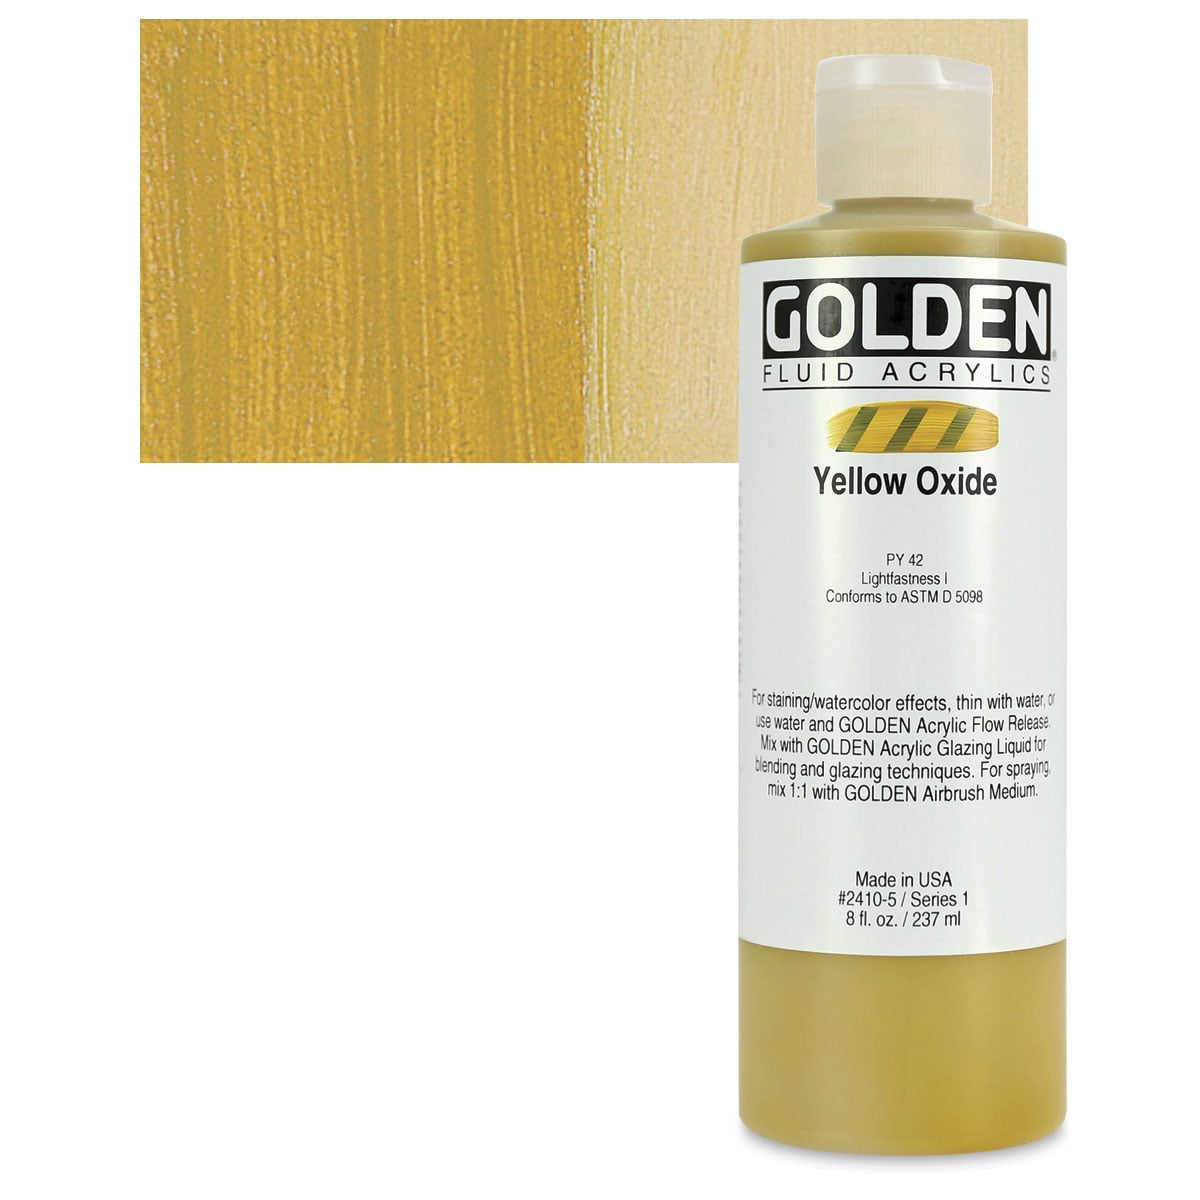 Golden Fluid Acrylic Paint, 8 oz, Yellow Oxide 